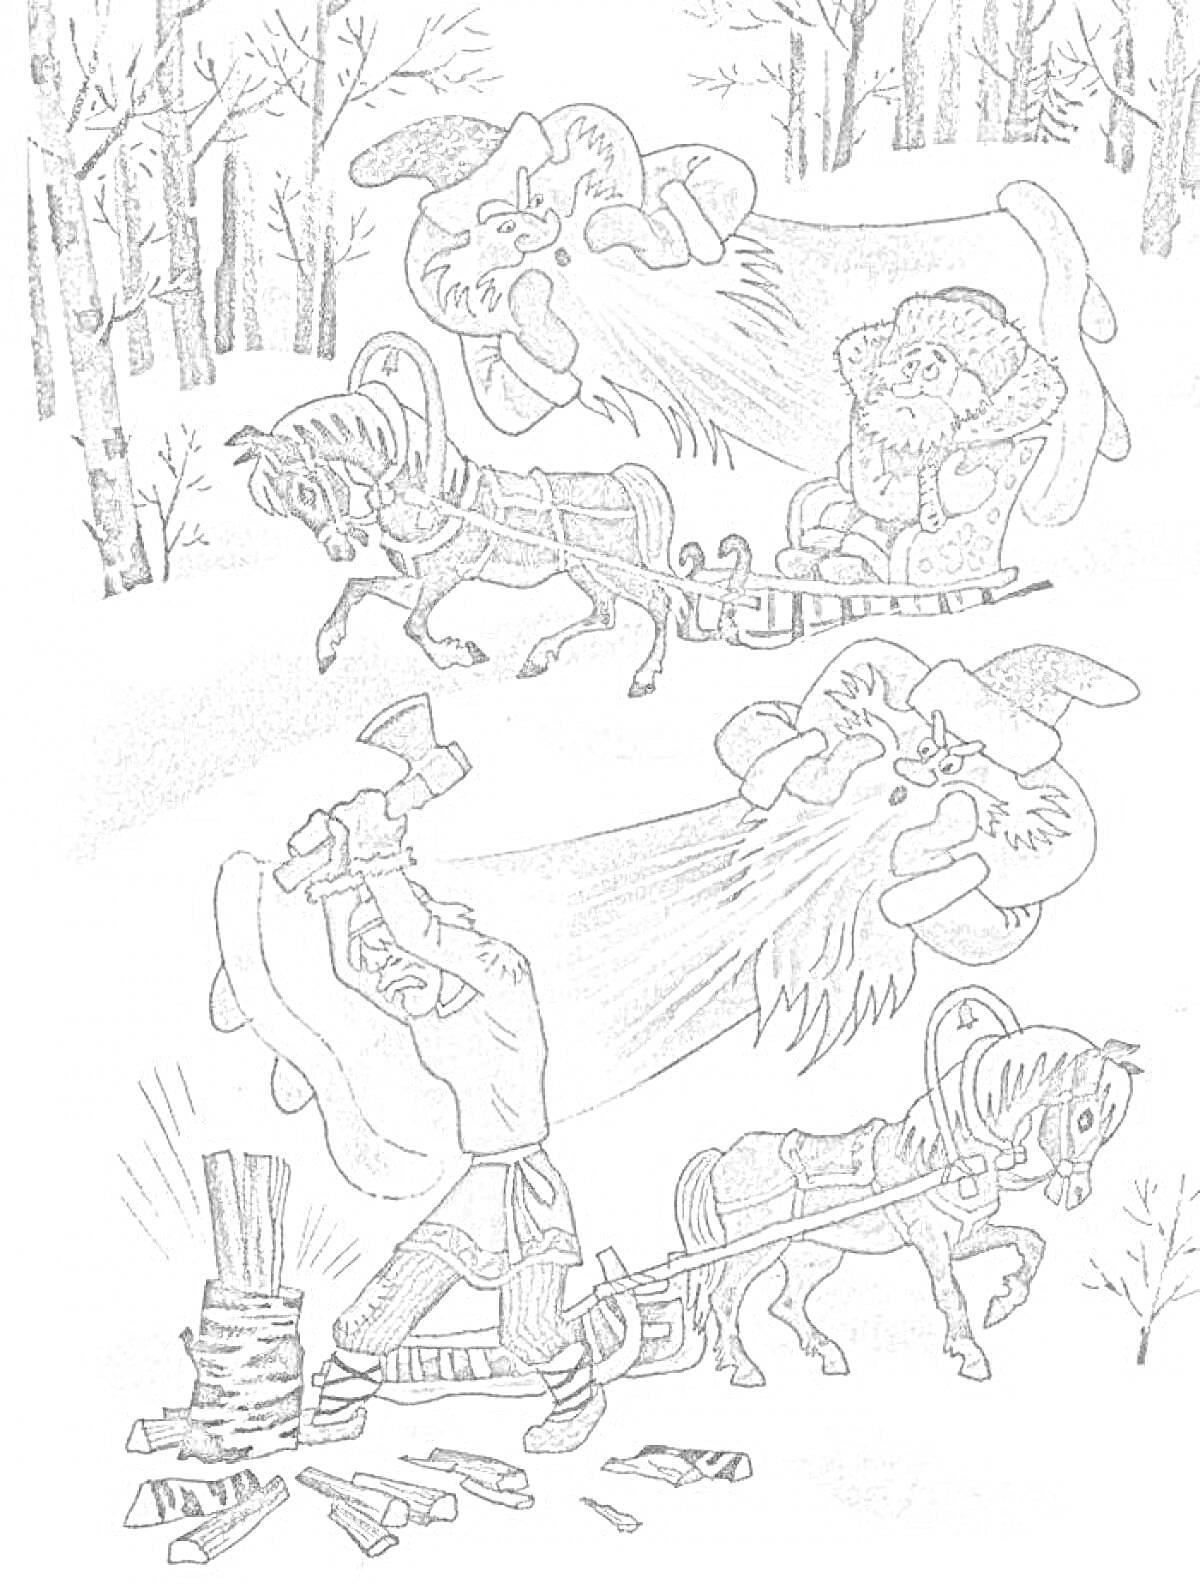 Раскраска два мороза с лошадьми, санями и дровосеком среди зимнего леса